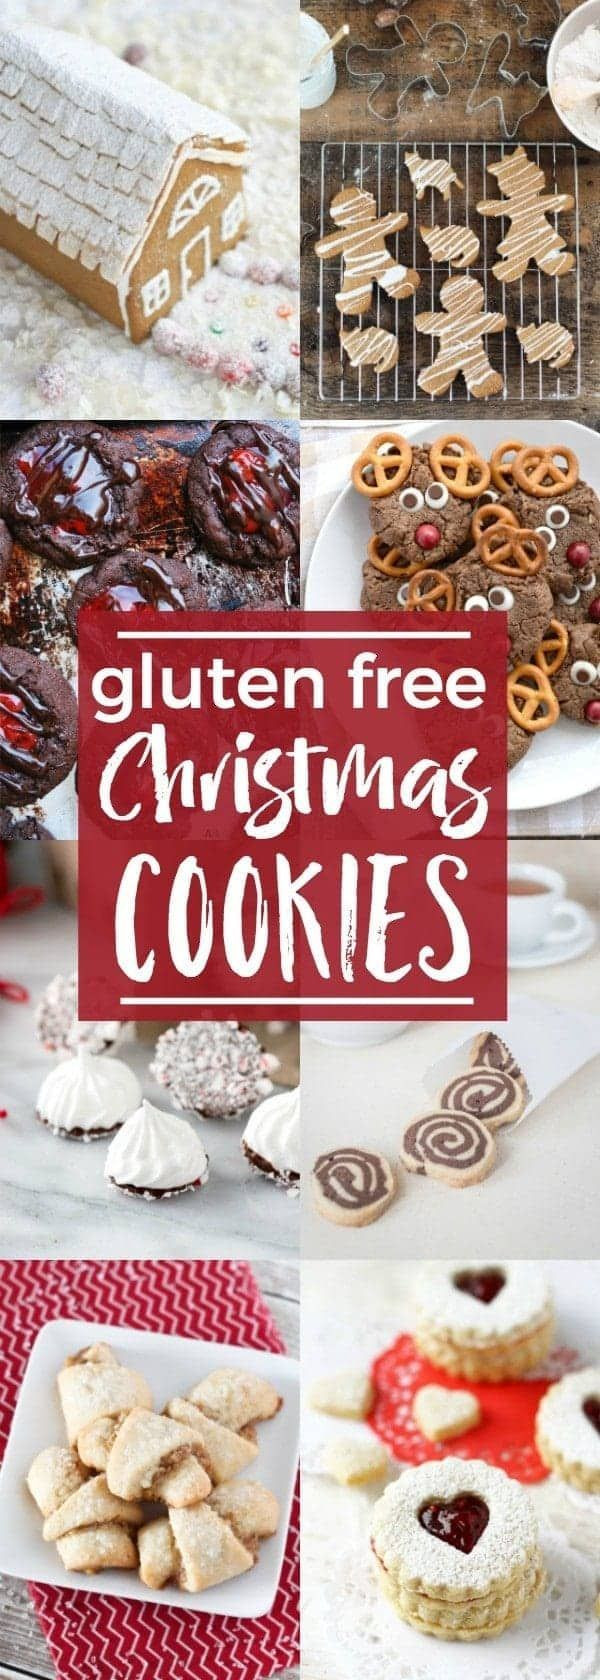 Best Gluten Free Christmas Cookies
 Gluten Free Christmas Cookies